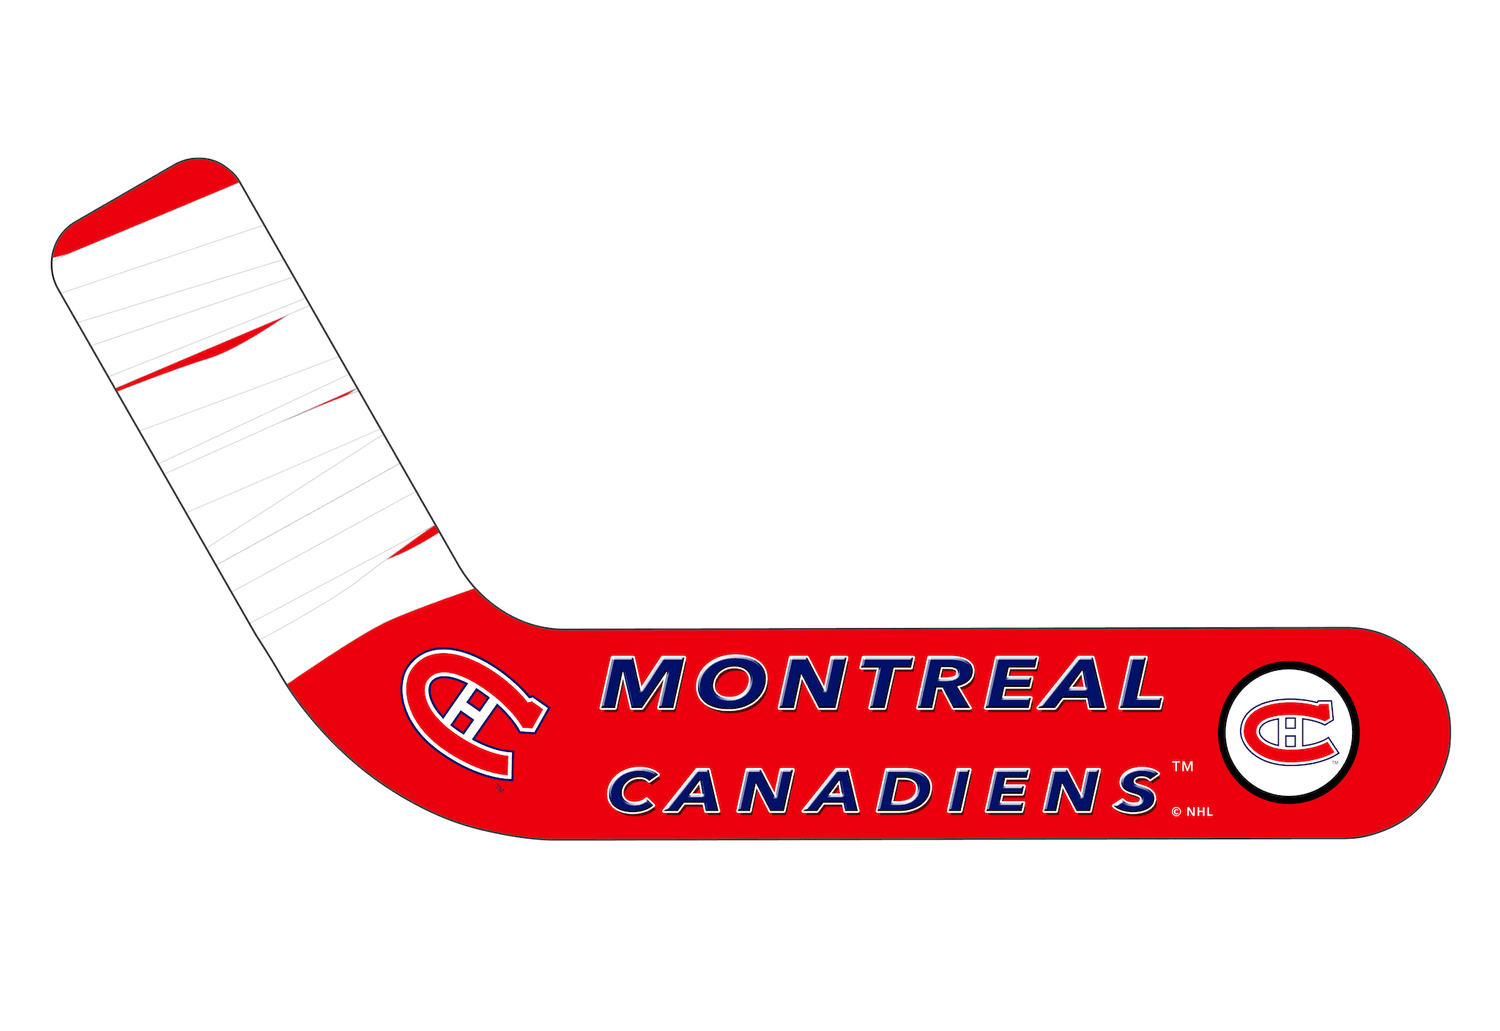 Vintage Montreal 1917-1918 - Ultimate Hockey Ceiling Fans